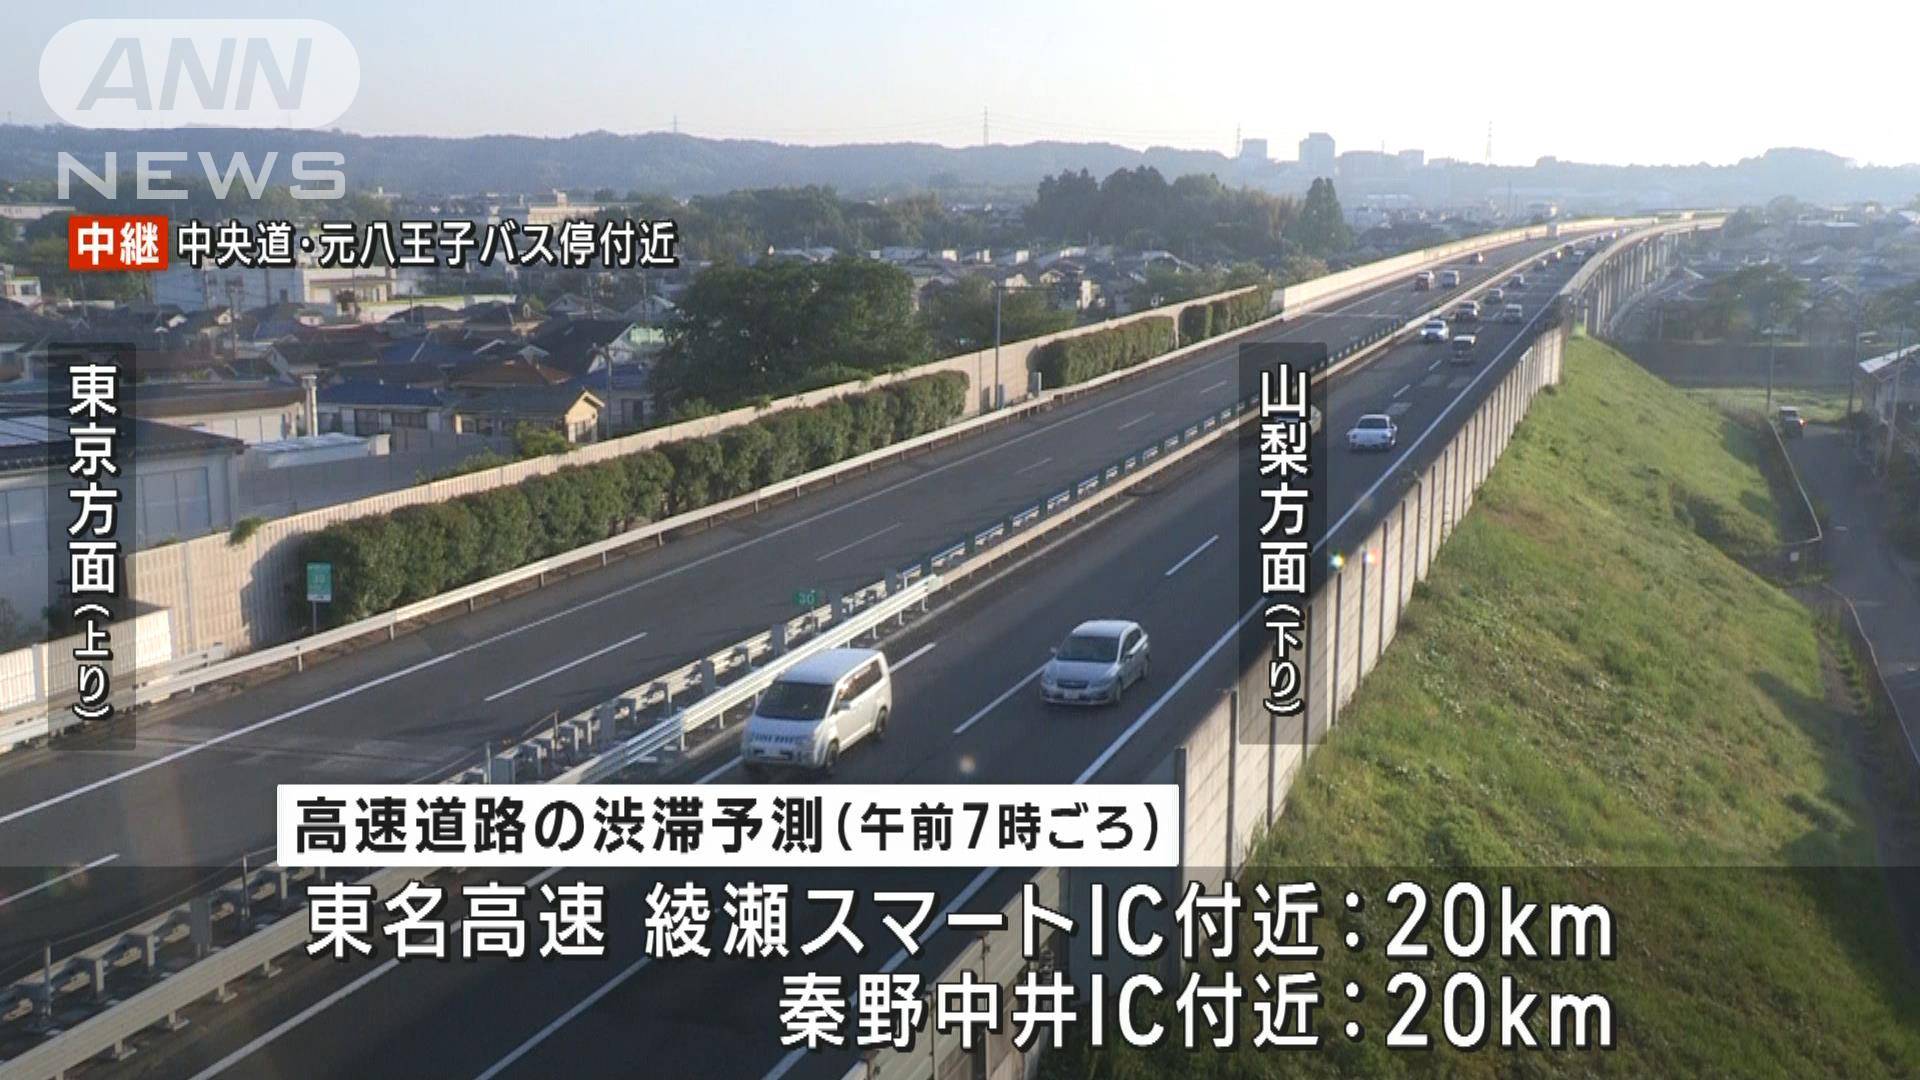 GWは下りで混雑予測 高速道路で20km渋滞予測も[2023/04/29 05:51] - テレビ朝日